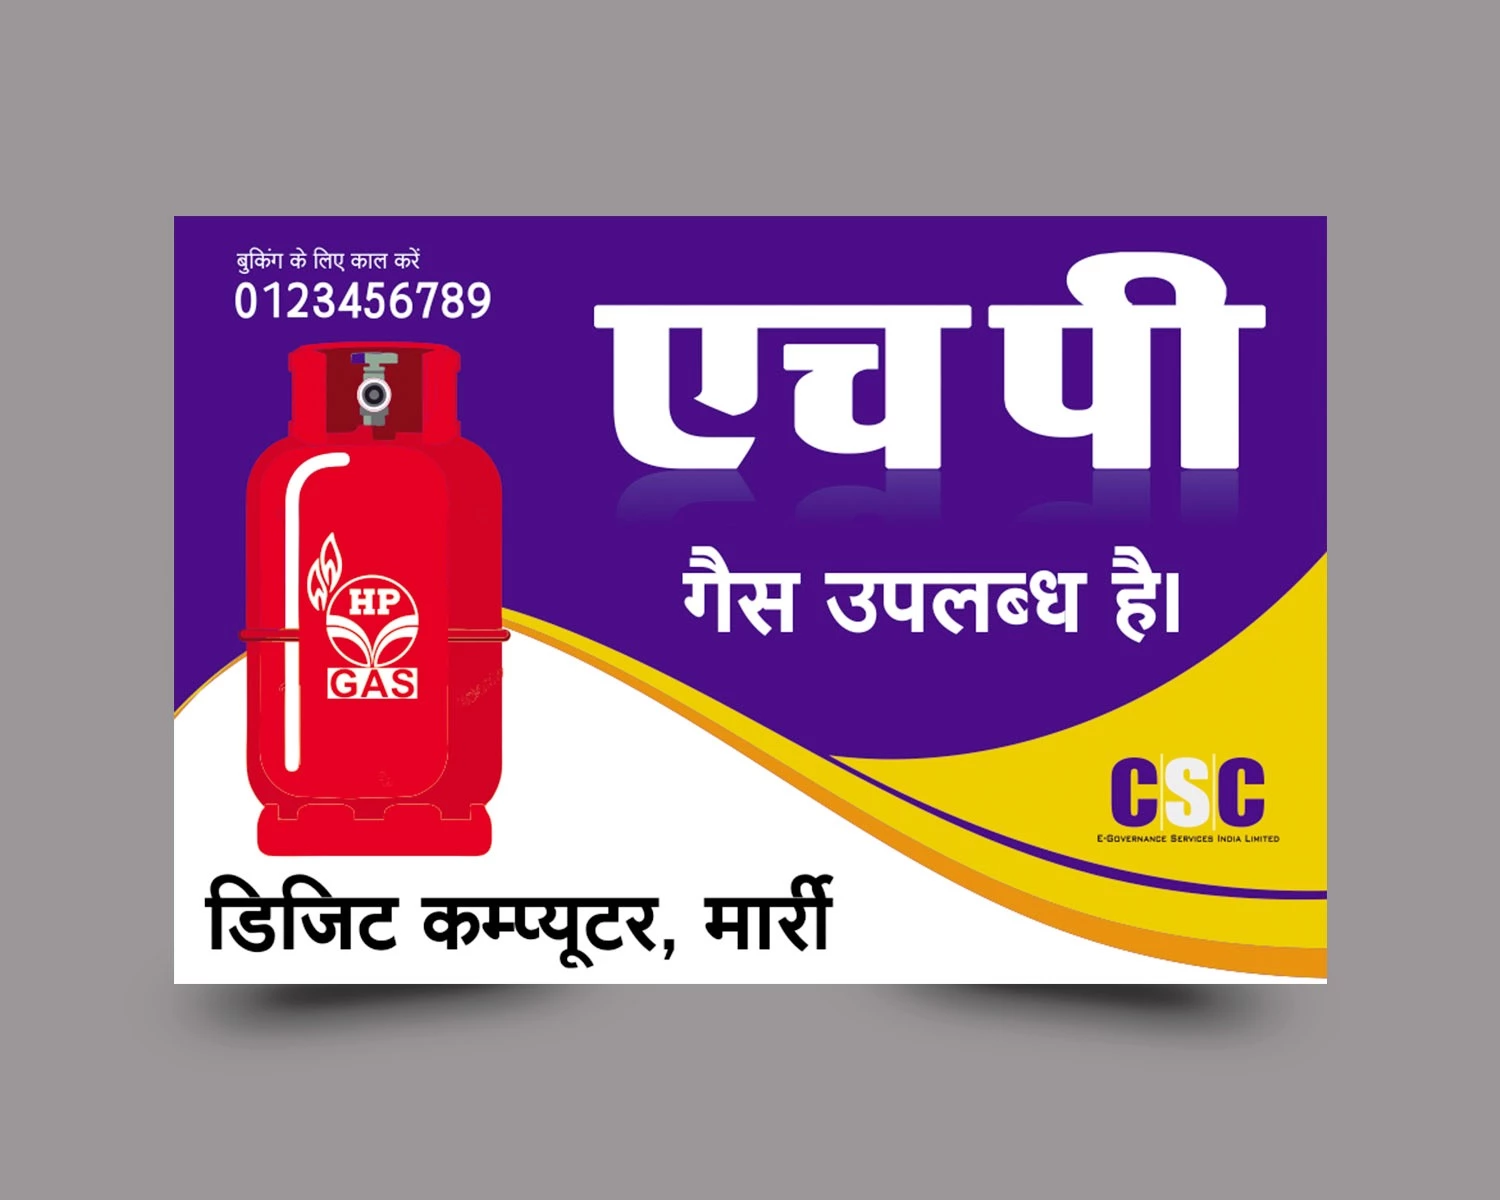 Hp gas booking flex banner in Hindi 271121